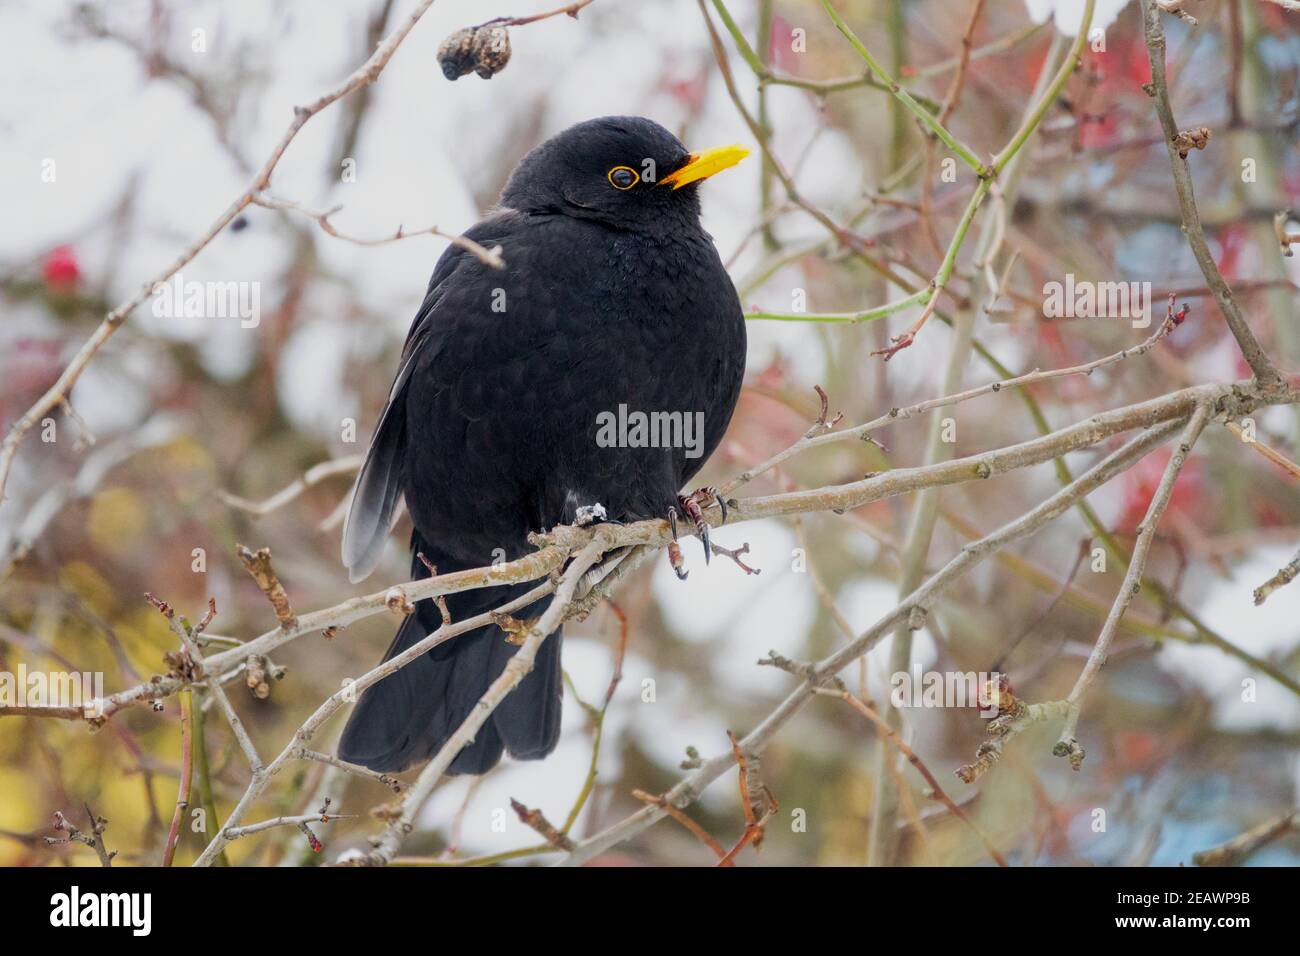 Blackbird Turdus merula perched in snow winter bush, fluffy feathers in the frost shrub Stock Photo